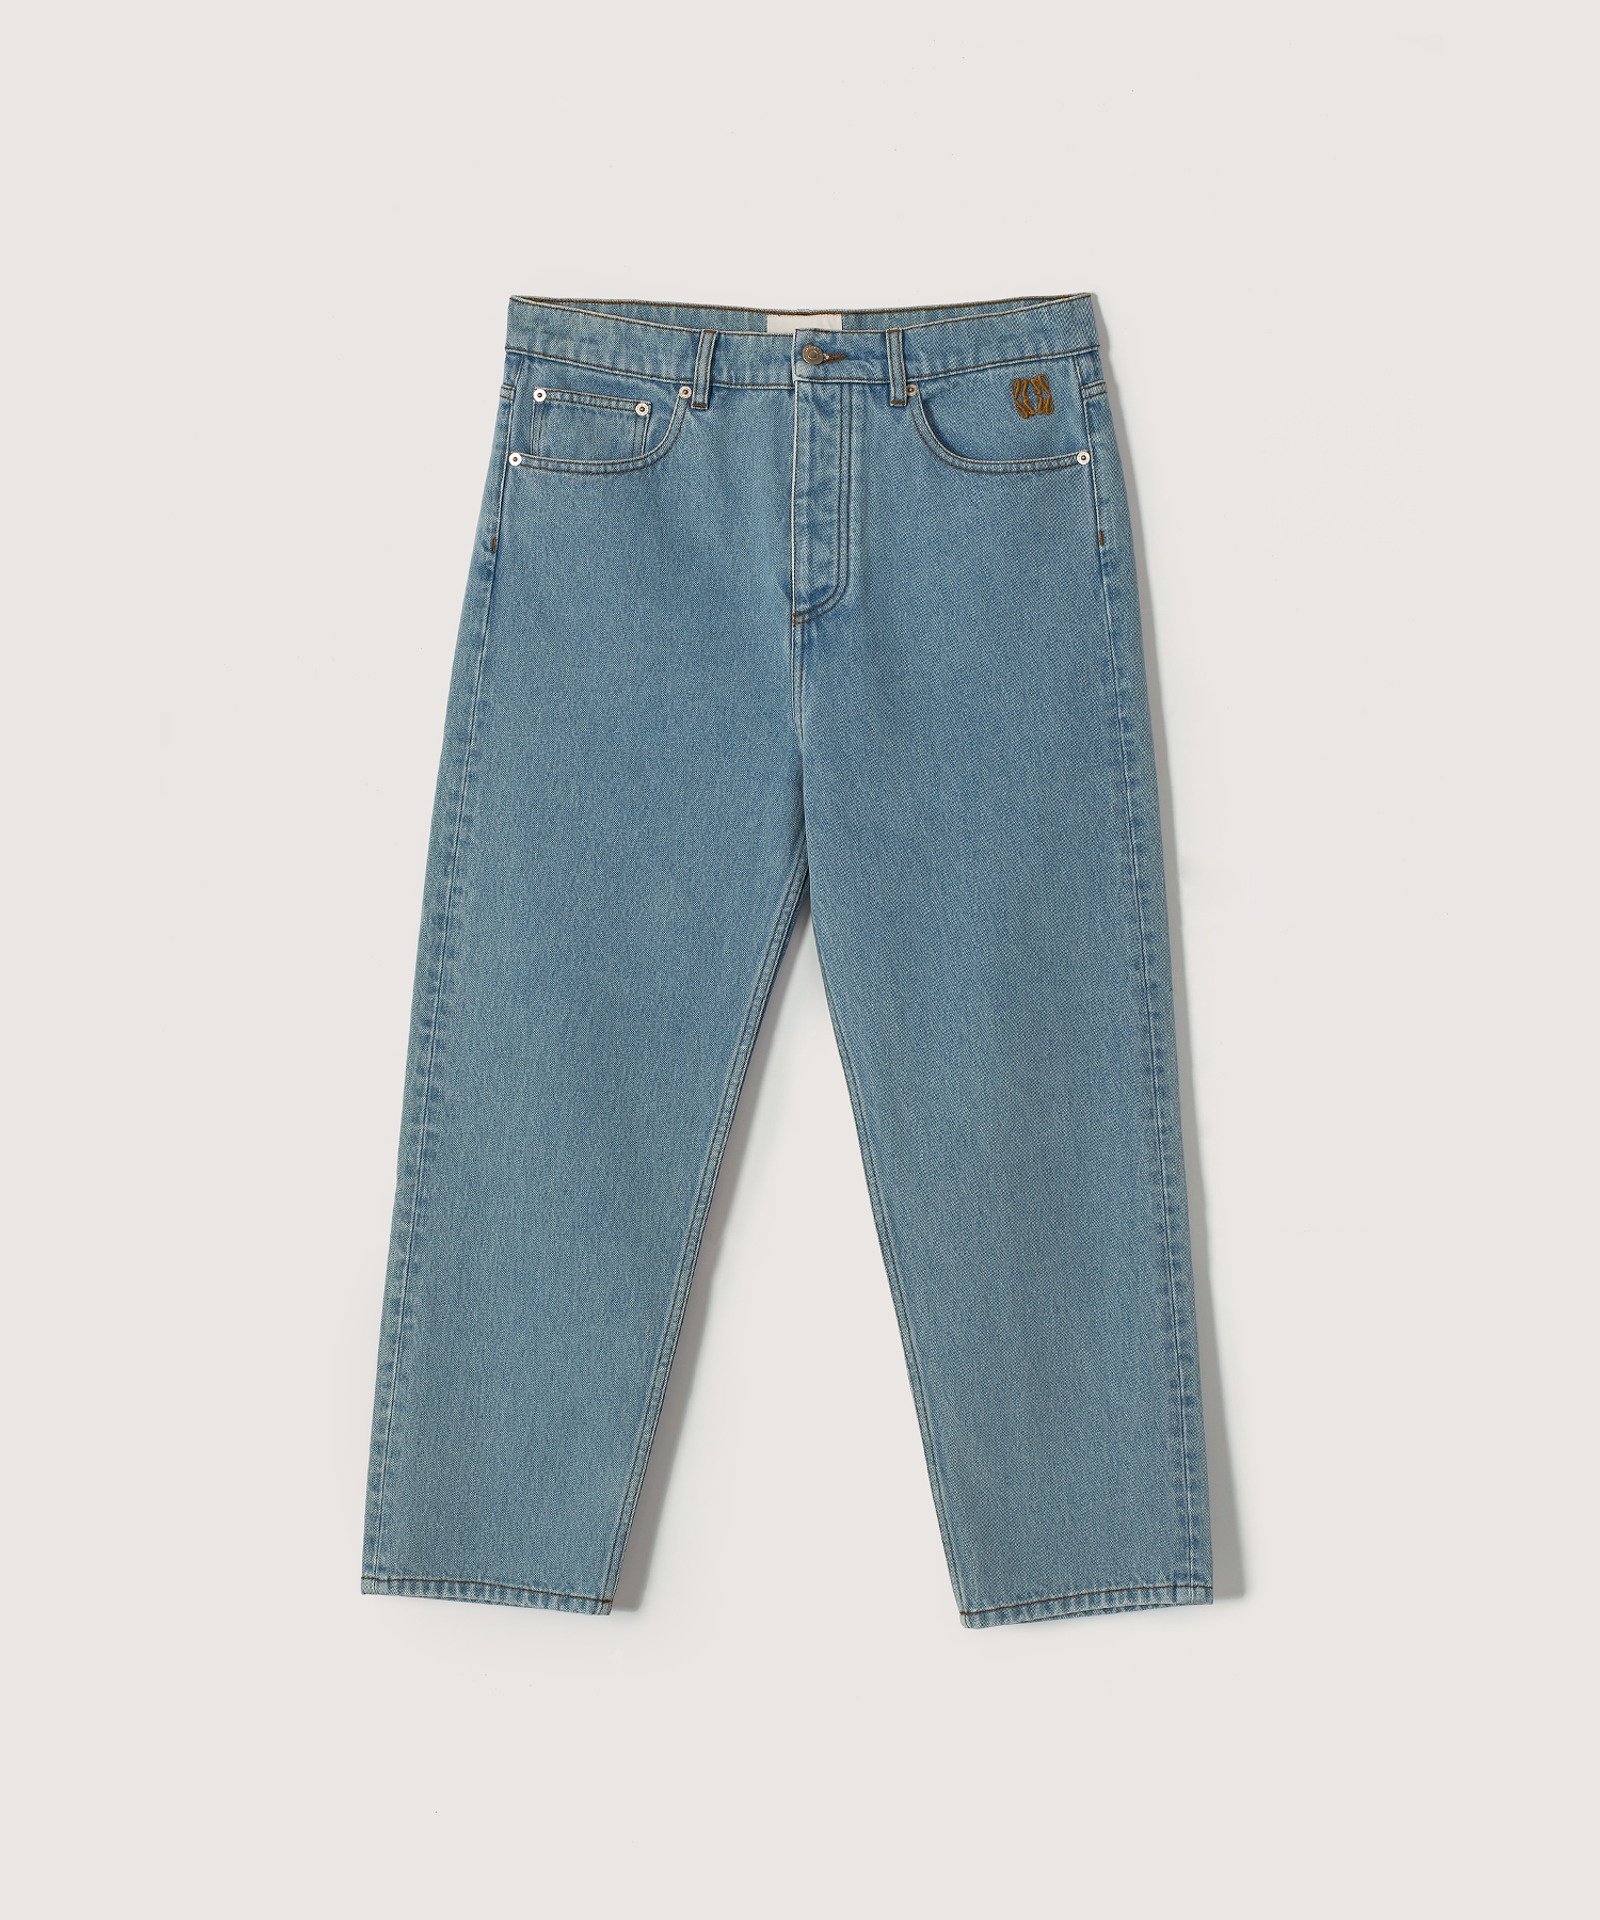 CONNOR - Loose-leg jeans - Light blue - 3